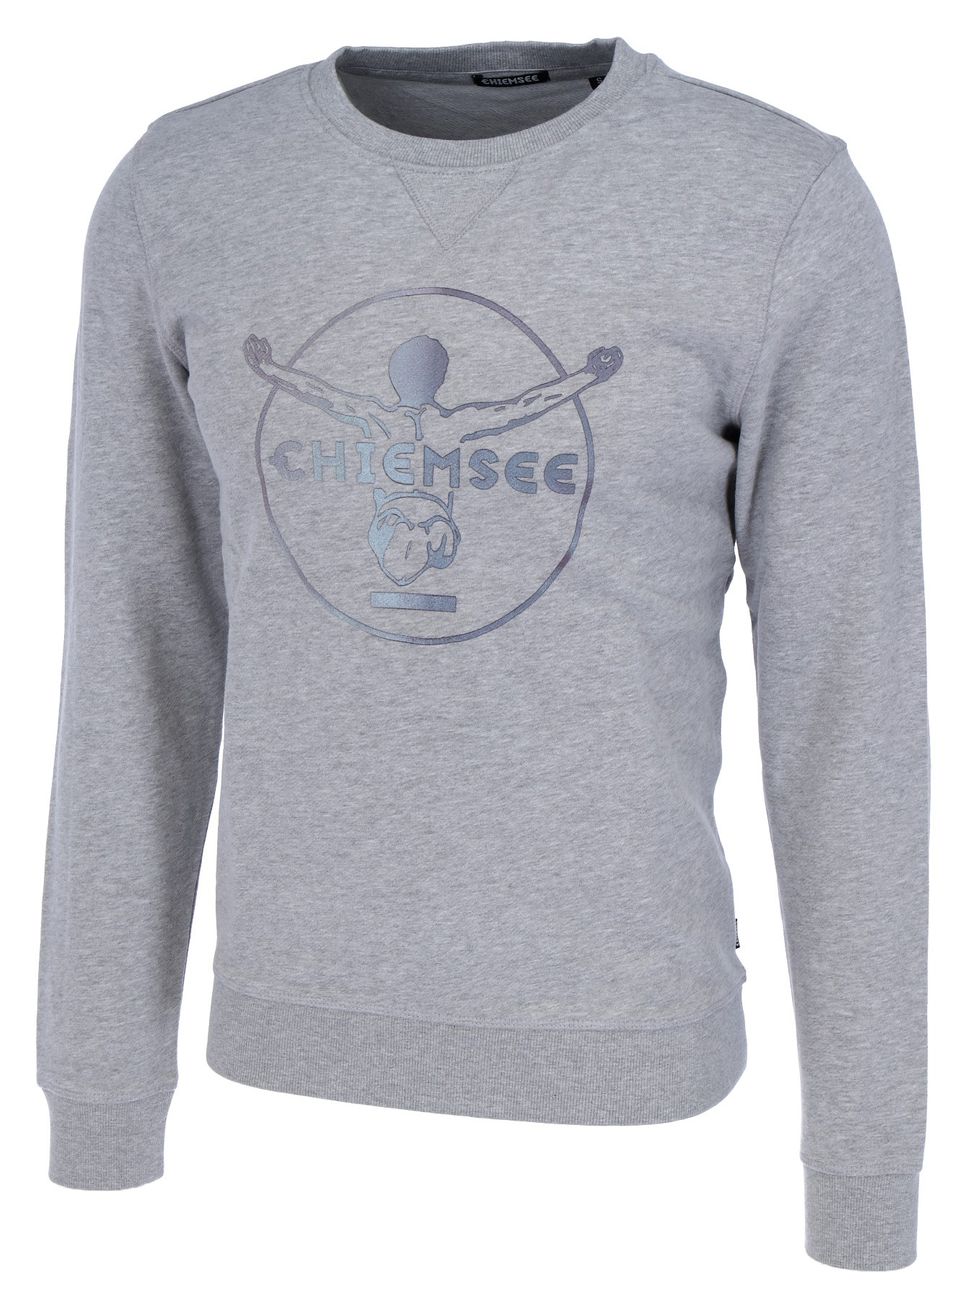 Chiemsee Unisex-Sweatshirt mit Print 22191503 - Chiemsee - SAGATOO - 4054583388396